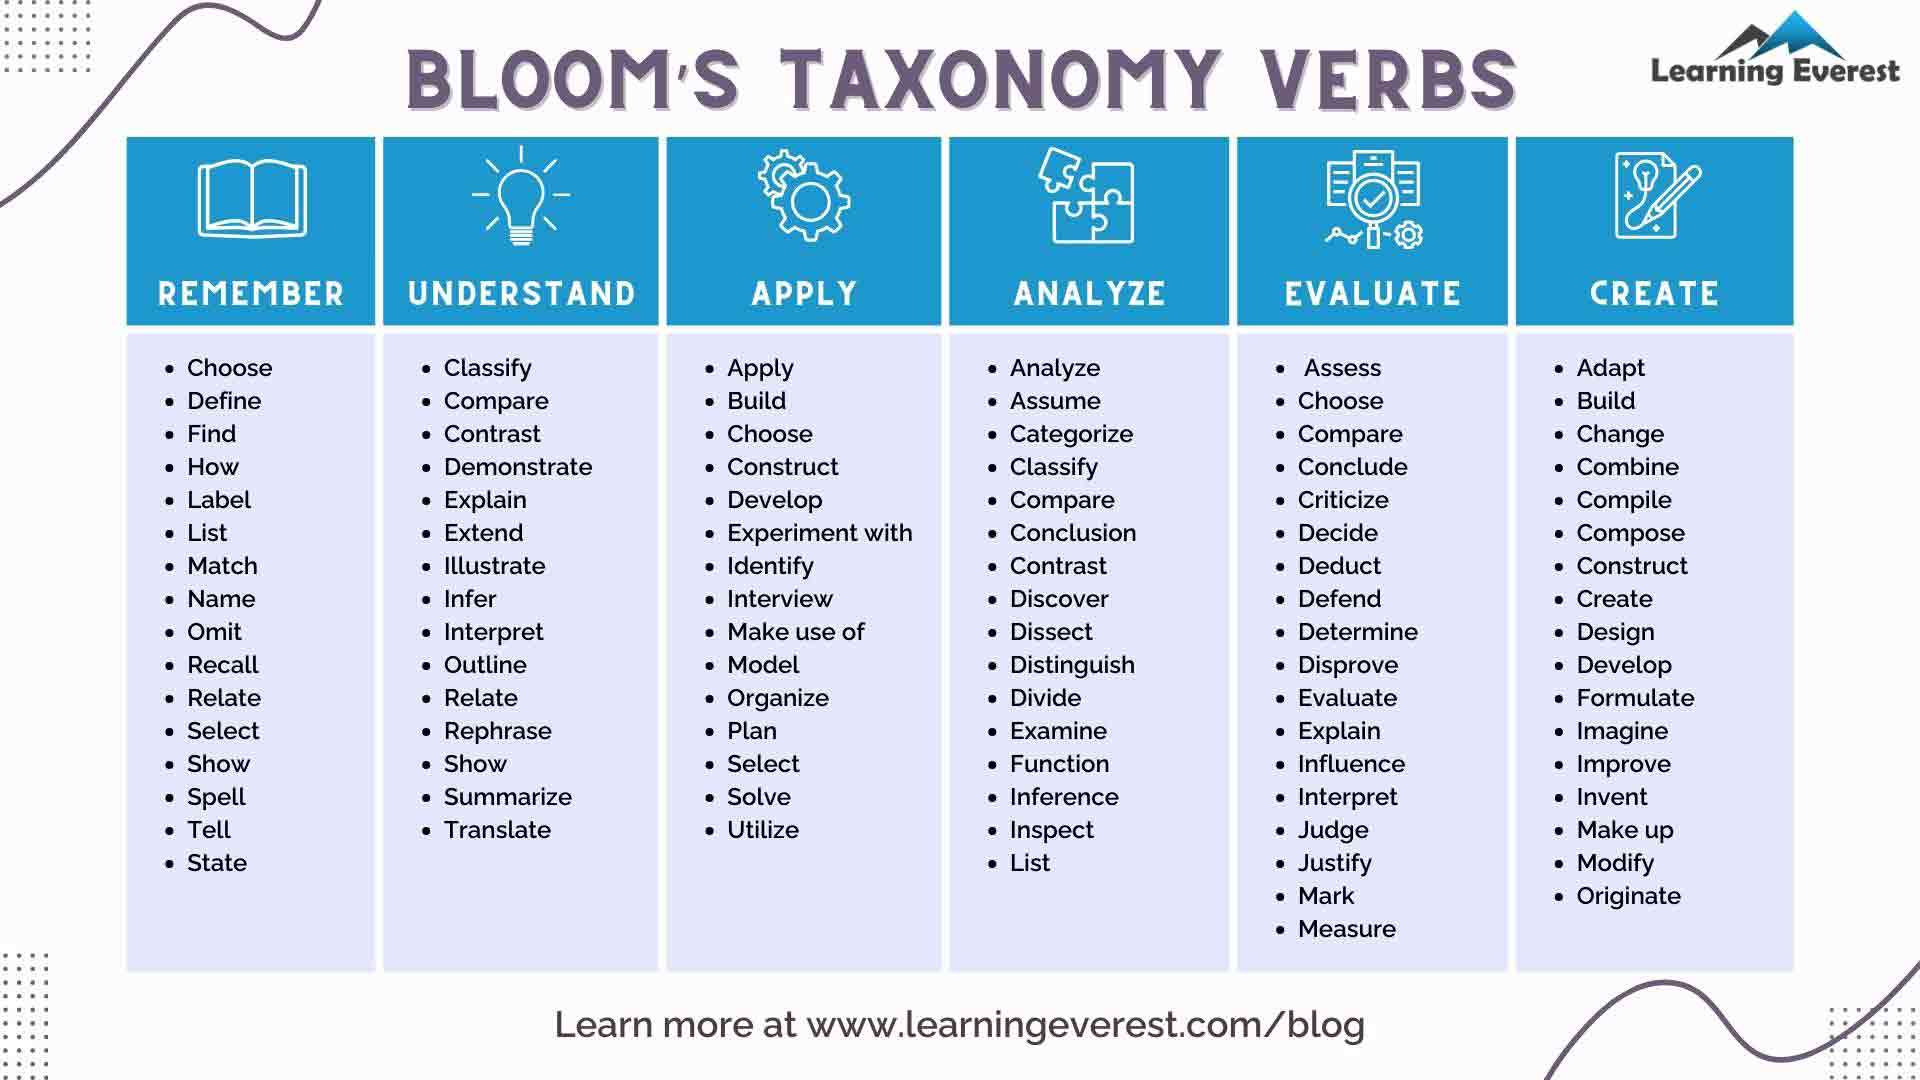 Revised Bloom’s Taxonomy Verbs